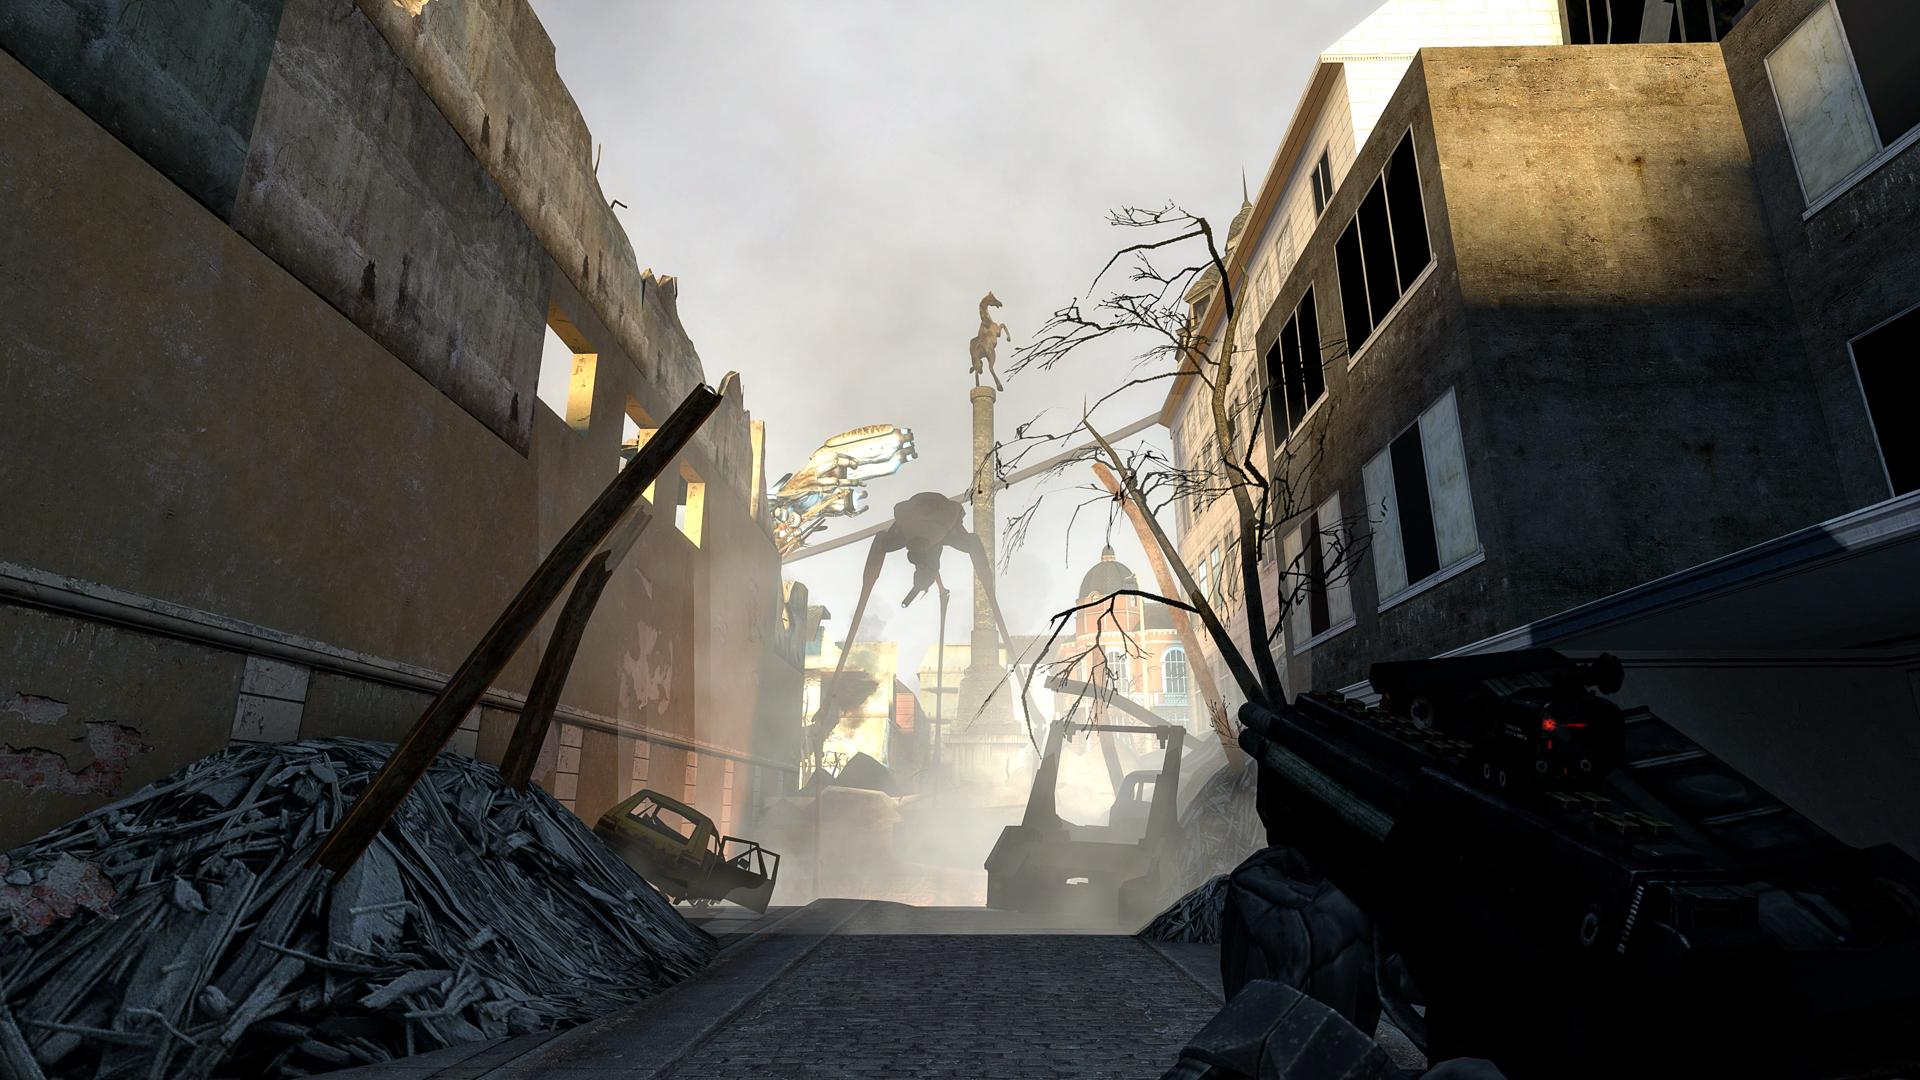 Screenshot №14 from game Half-Life 2: Update